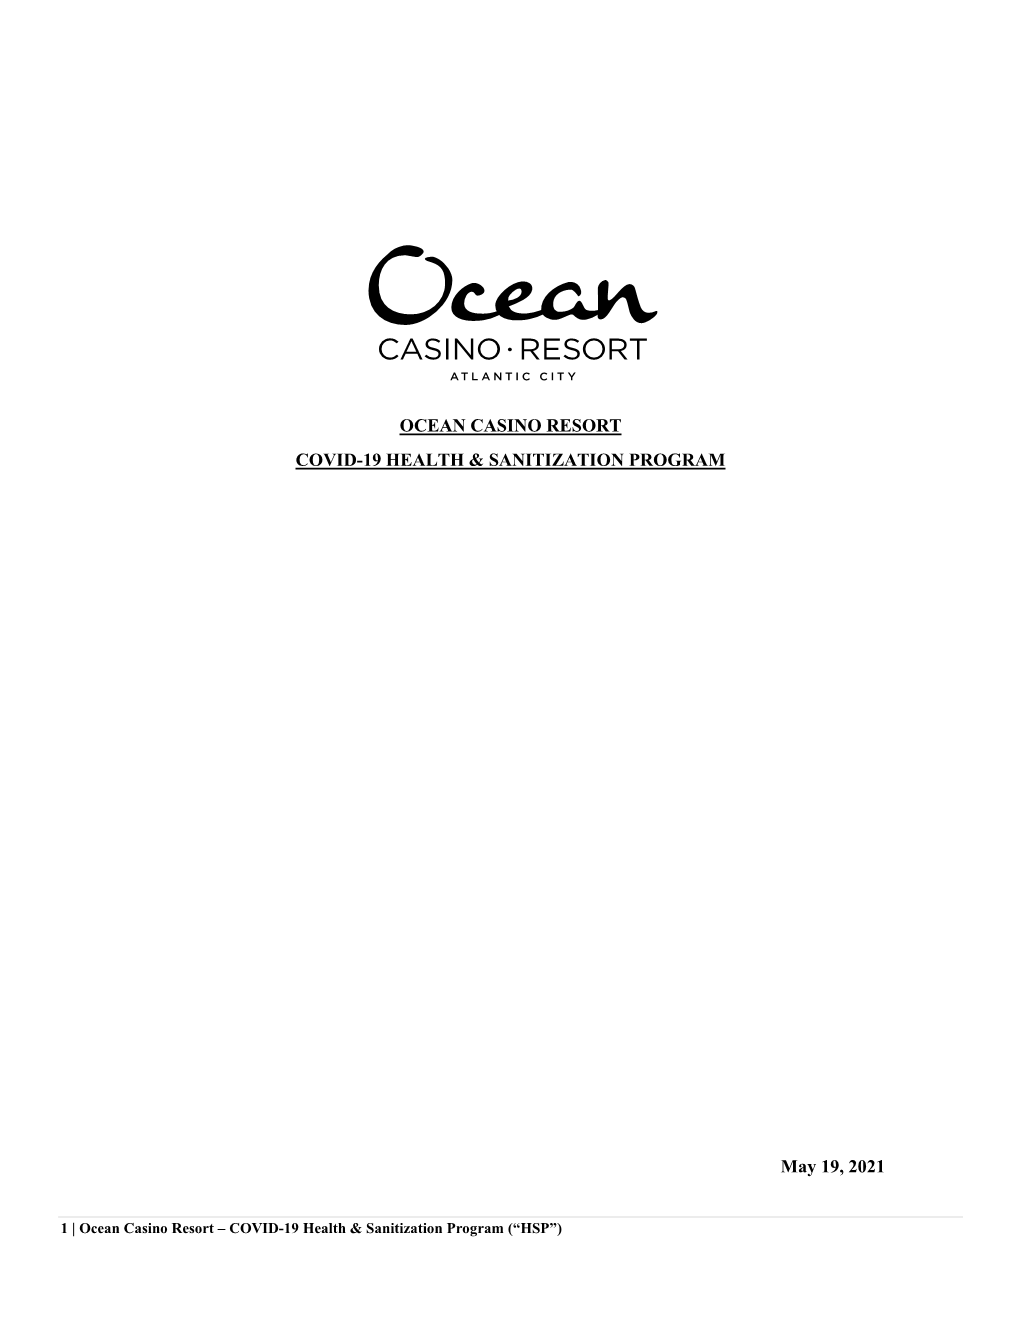 Ocean Casino Resort Covid-19 Health & Sanitization